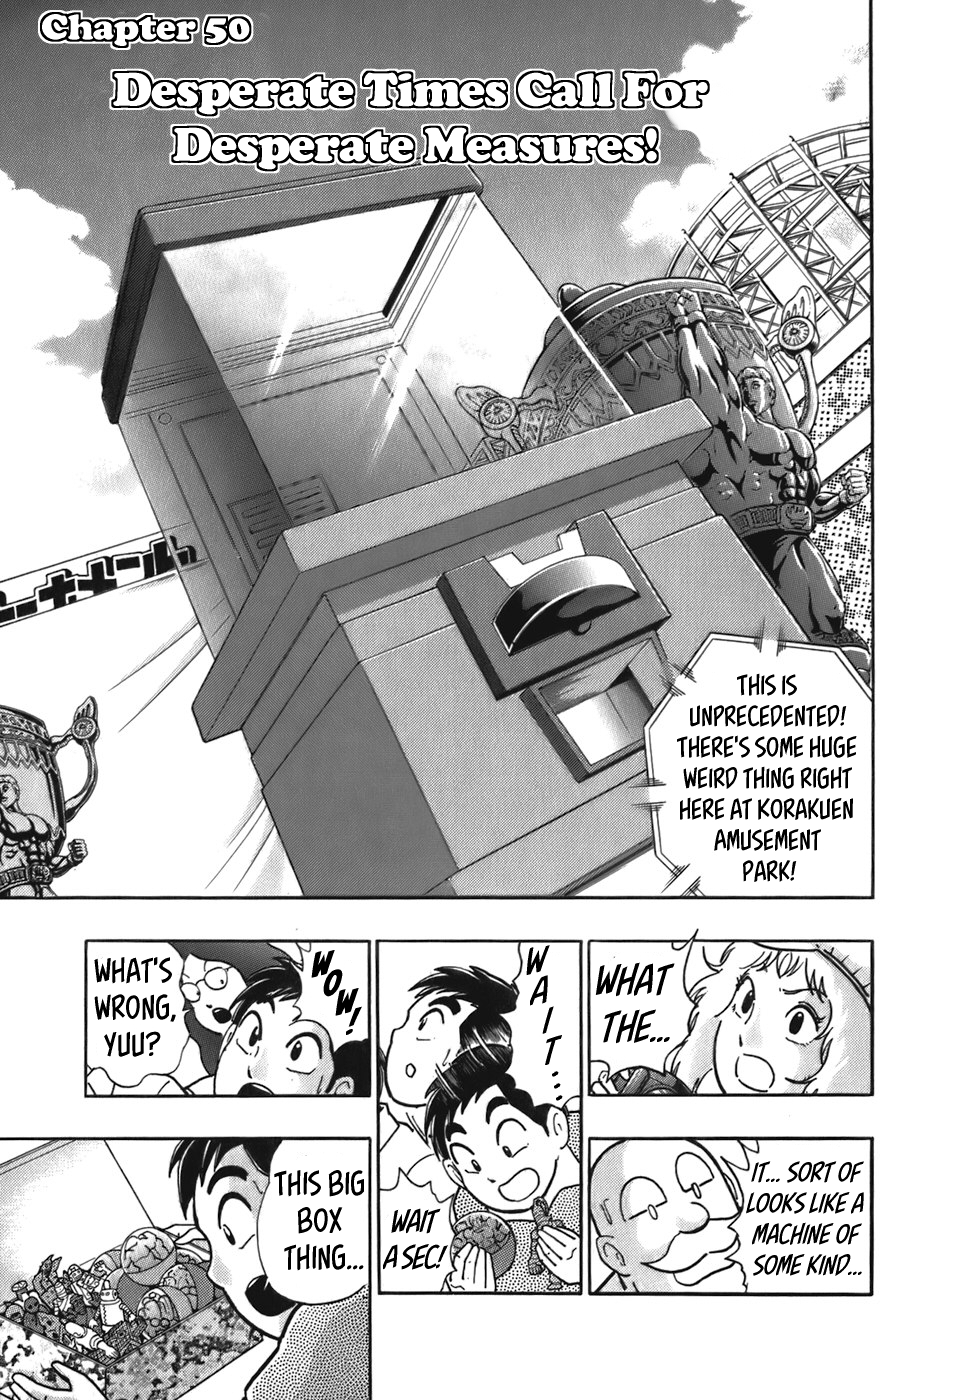 Kinnikuman Nisei: Ultimate Choujin Tag Vol. 5 Ch. 50 Desperate Times Call For Desperate Measures!